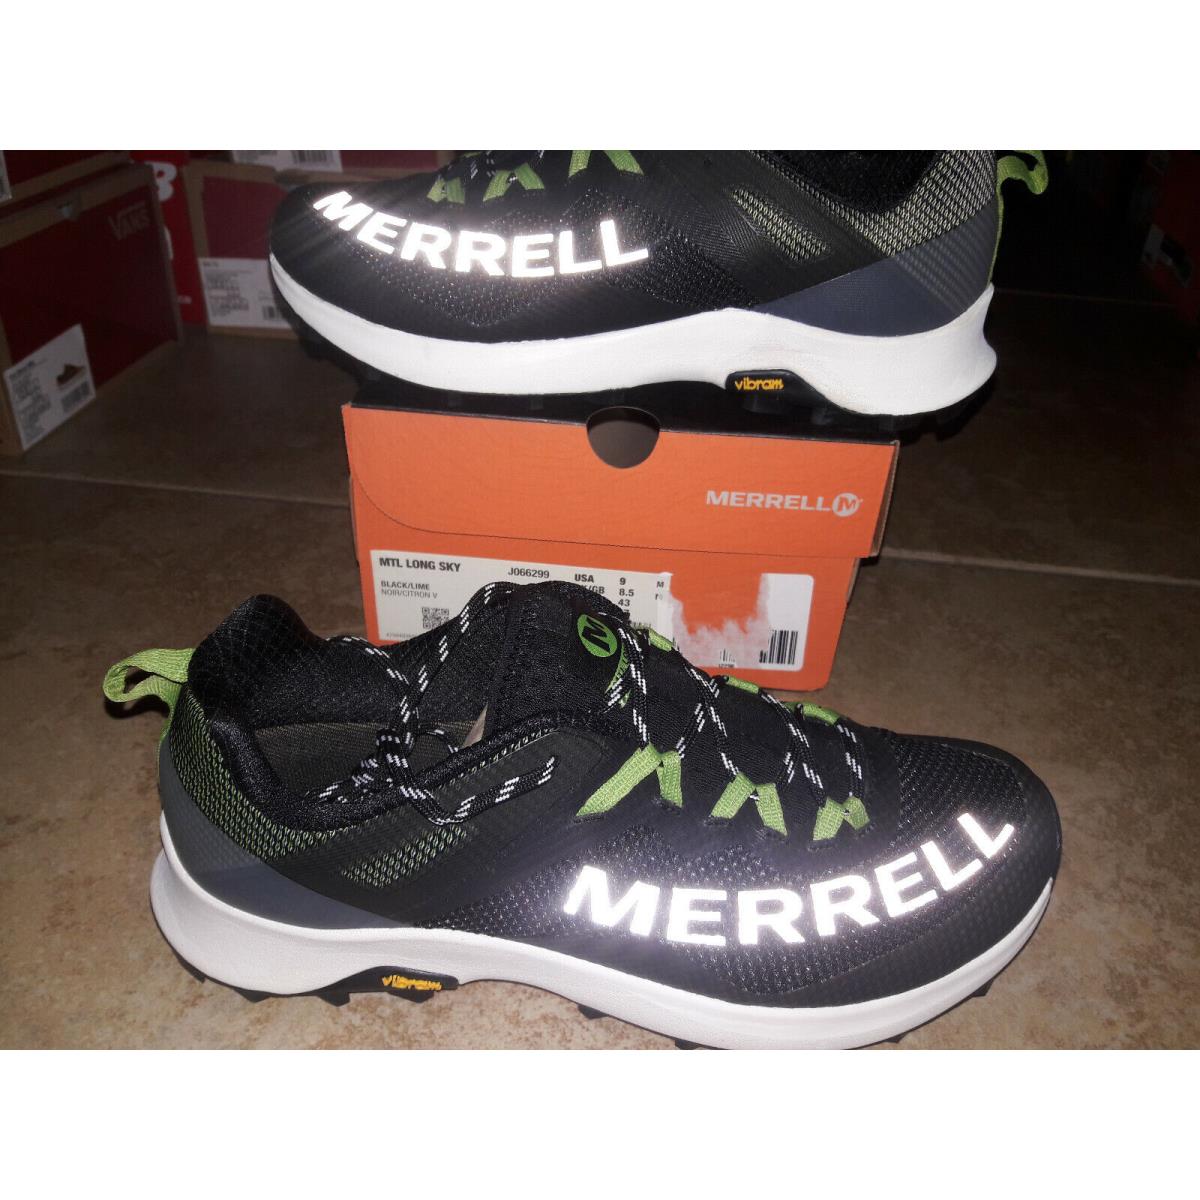 Mens Merrell Mtl Long Sky Trail Running Shoes Size 9